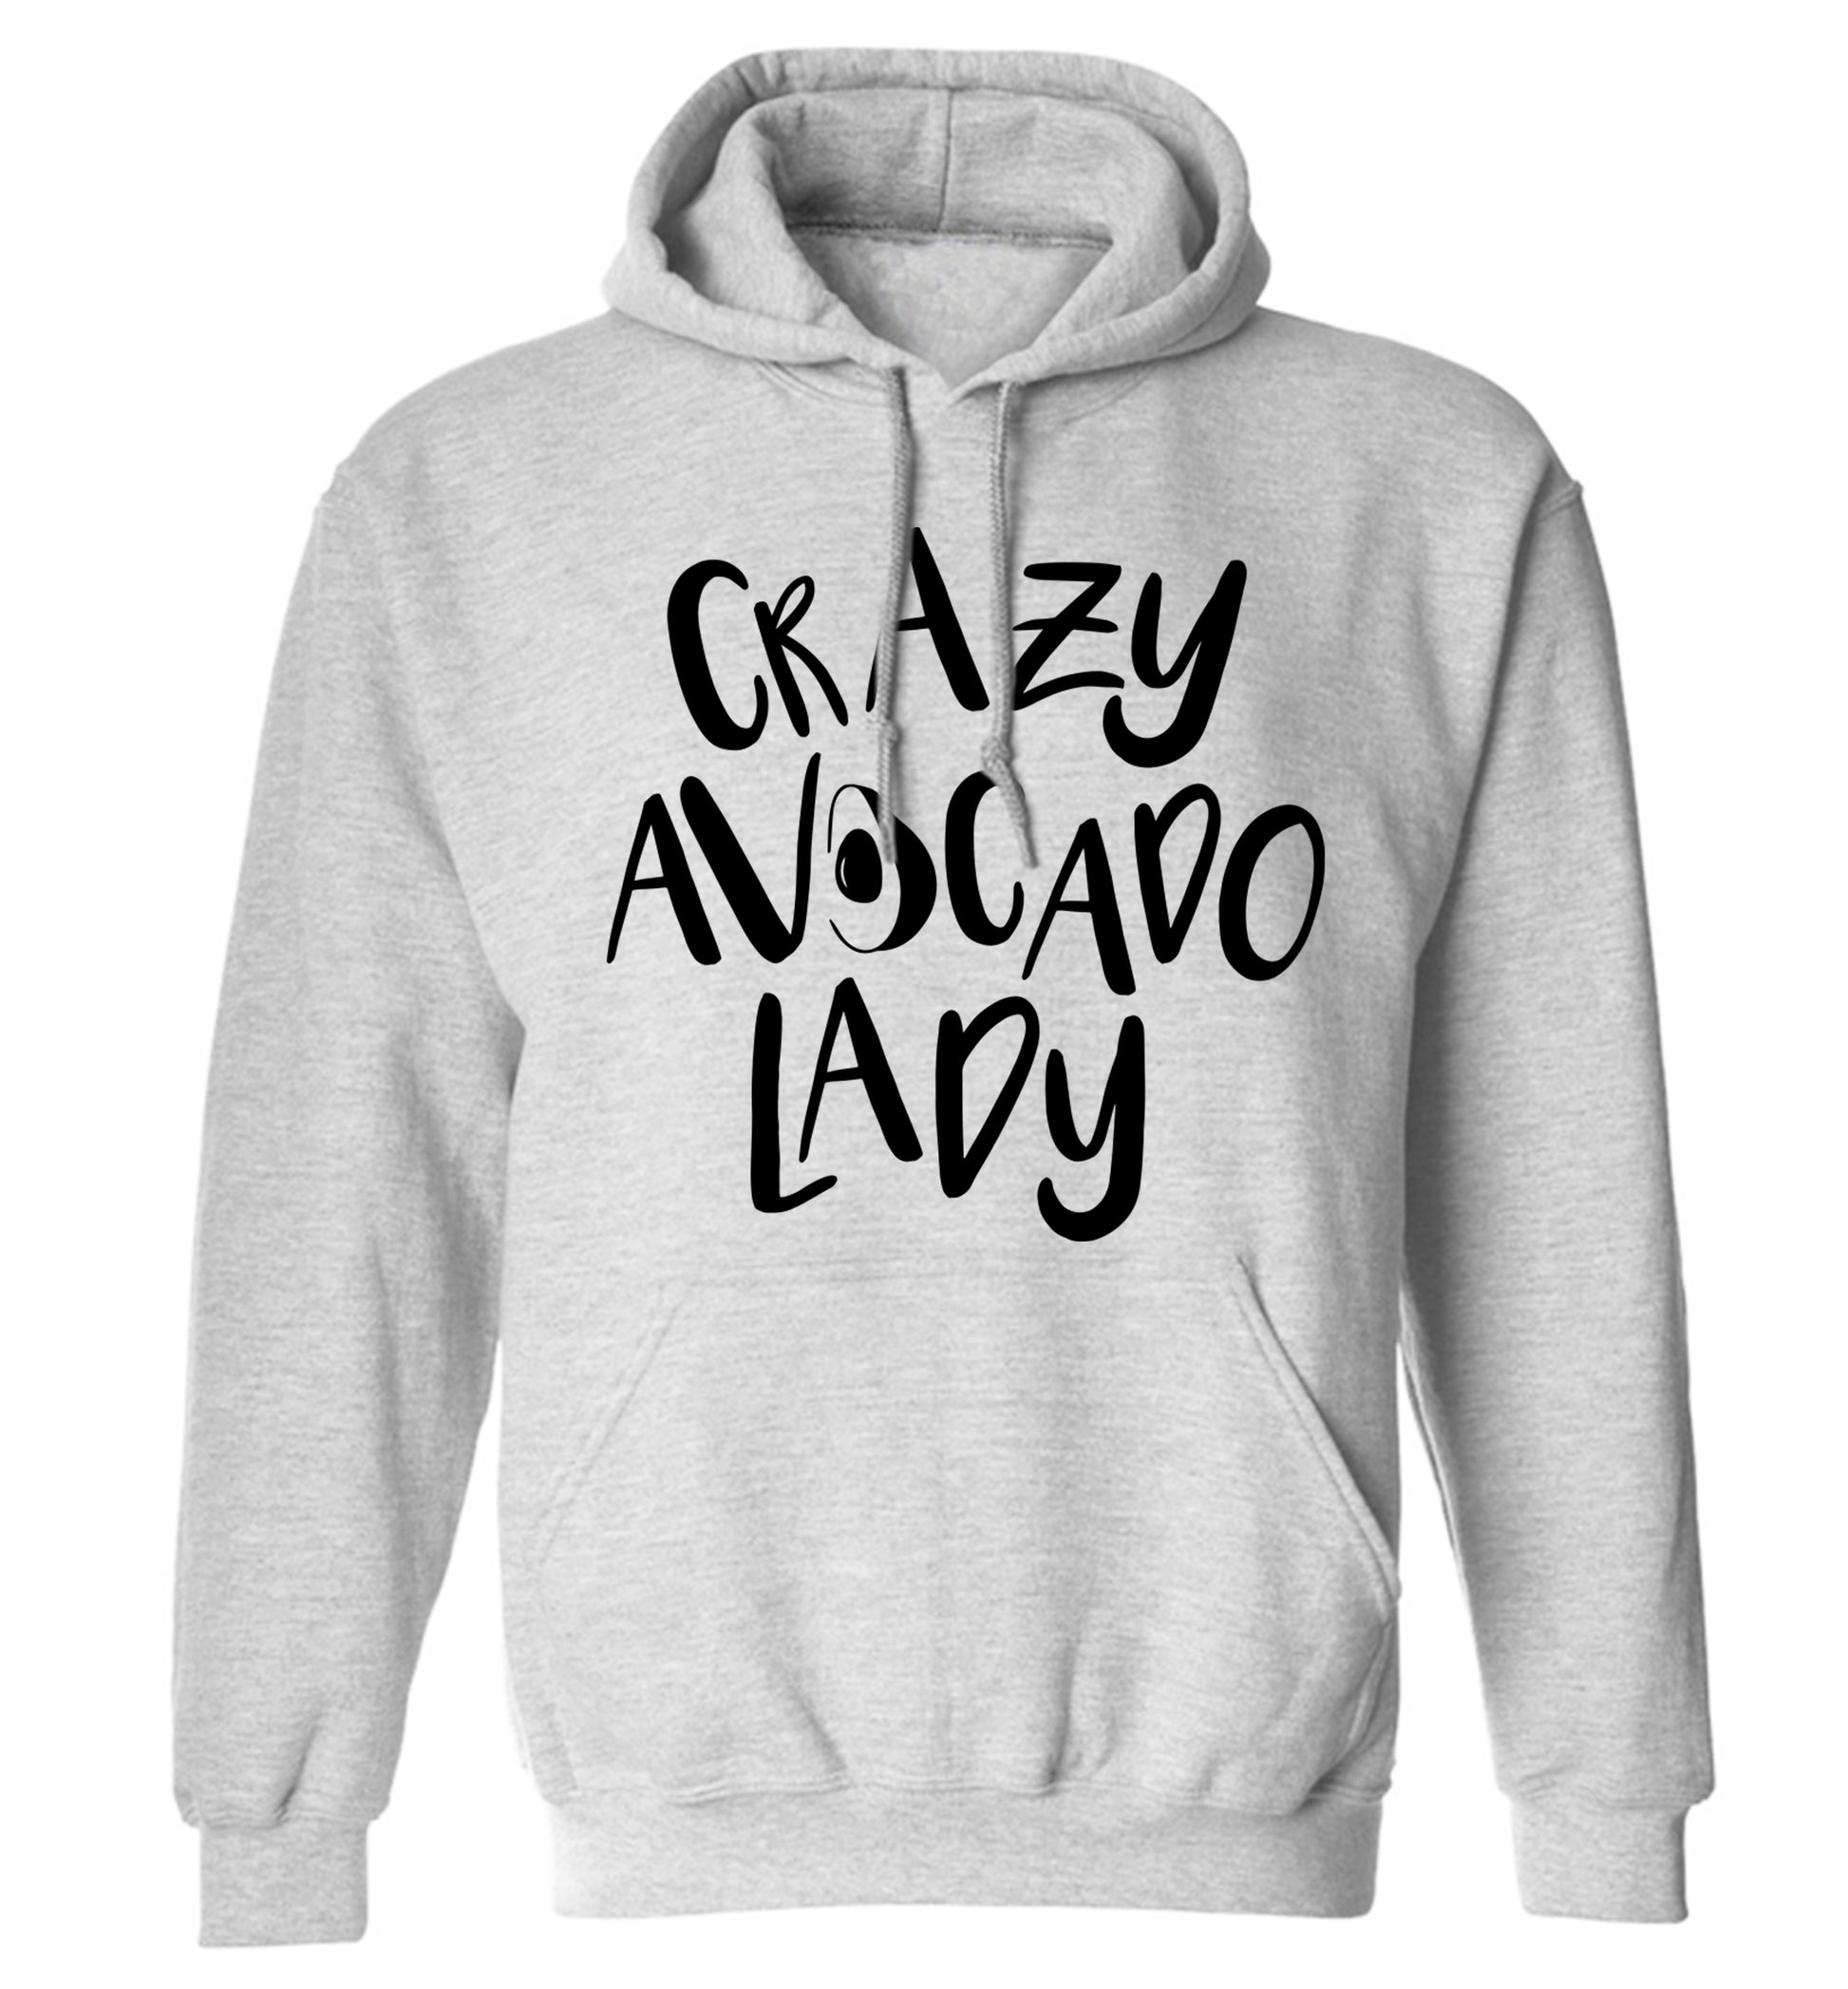 Crazy avocado lady adults unisex grey hoodie 2XL